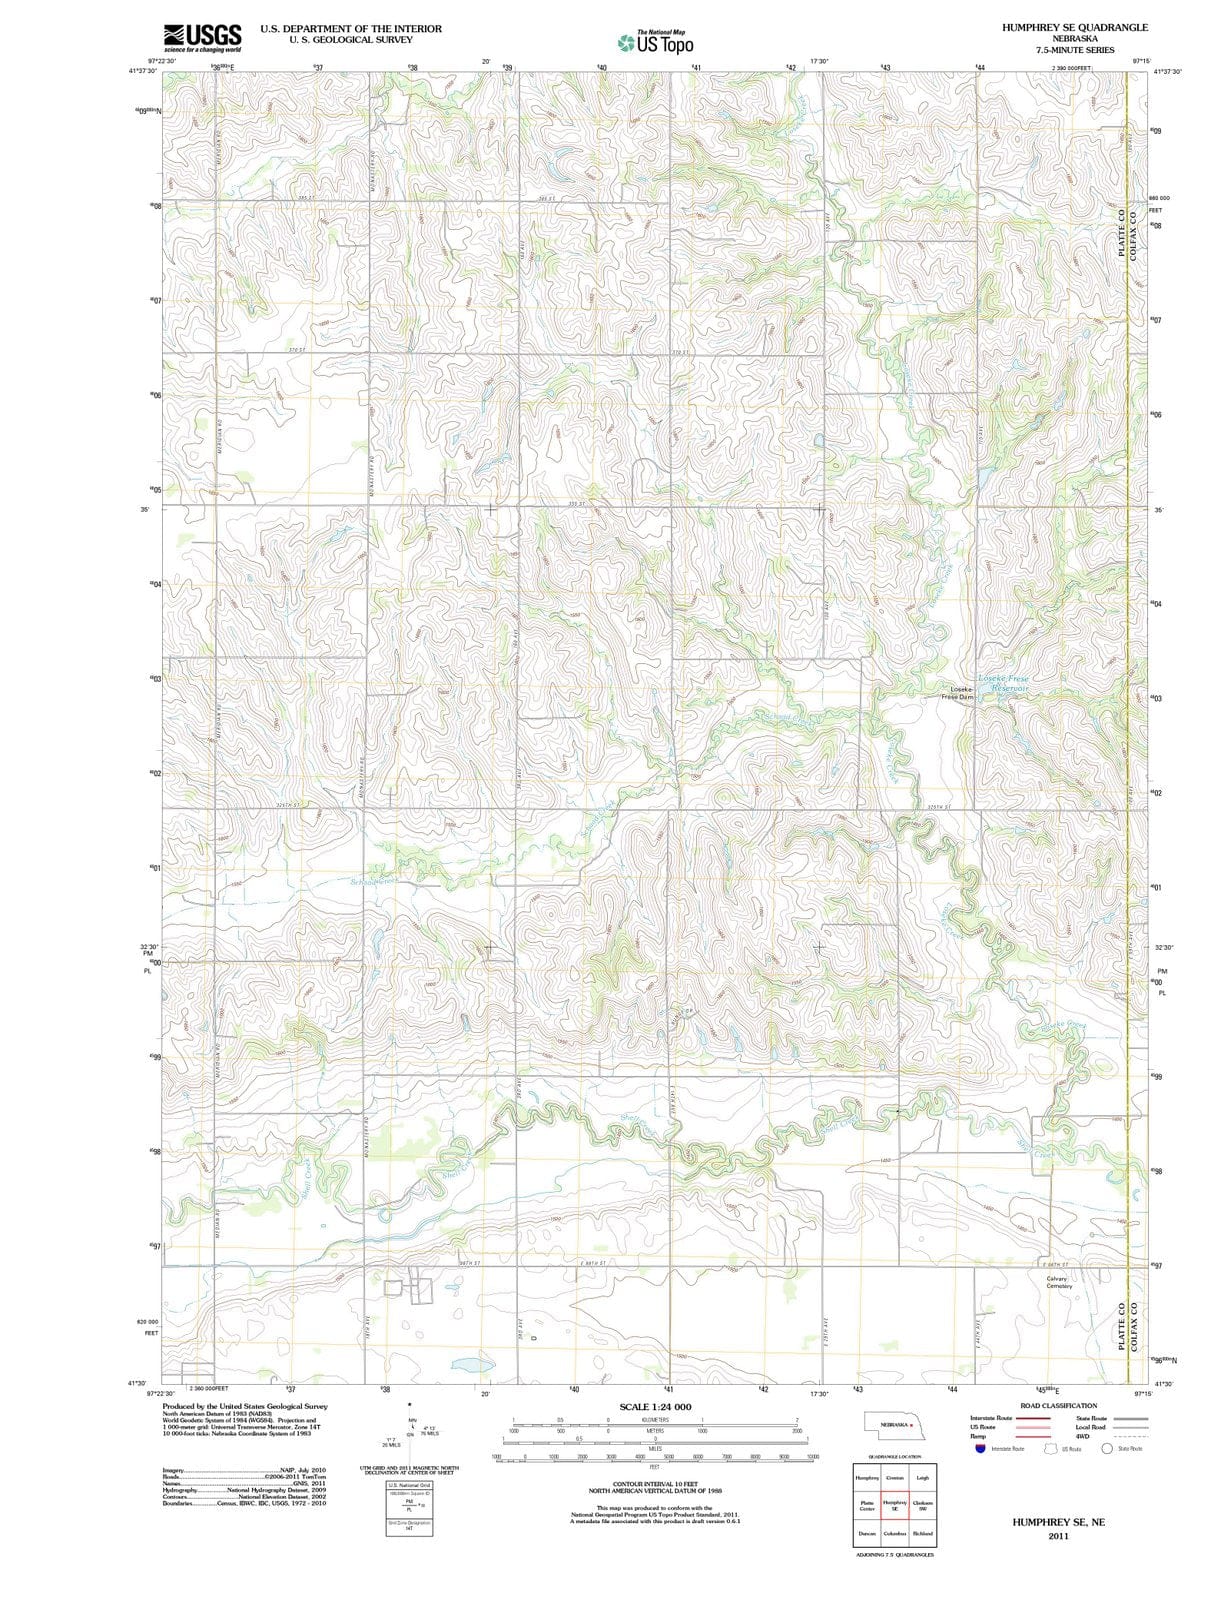 2011 Humphrey, NE - Nebraska - USGS Topographic Map v2